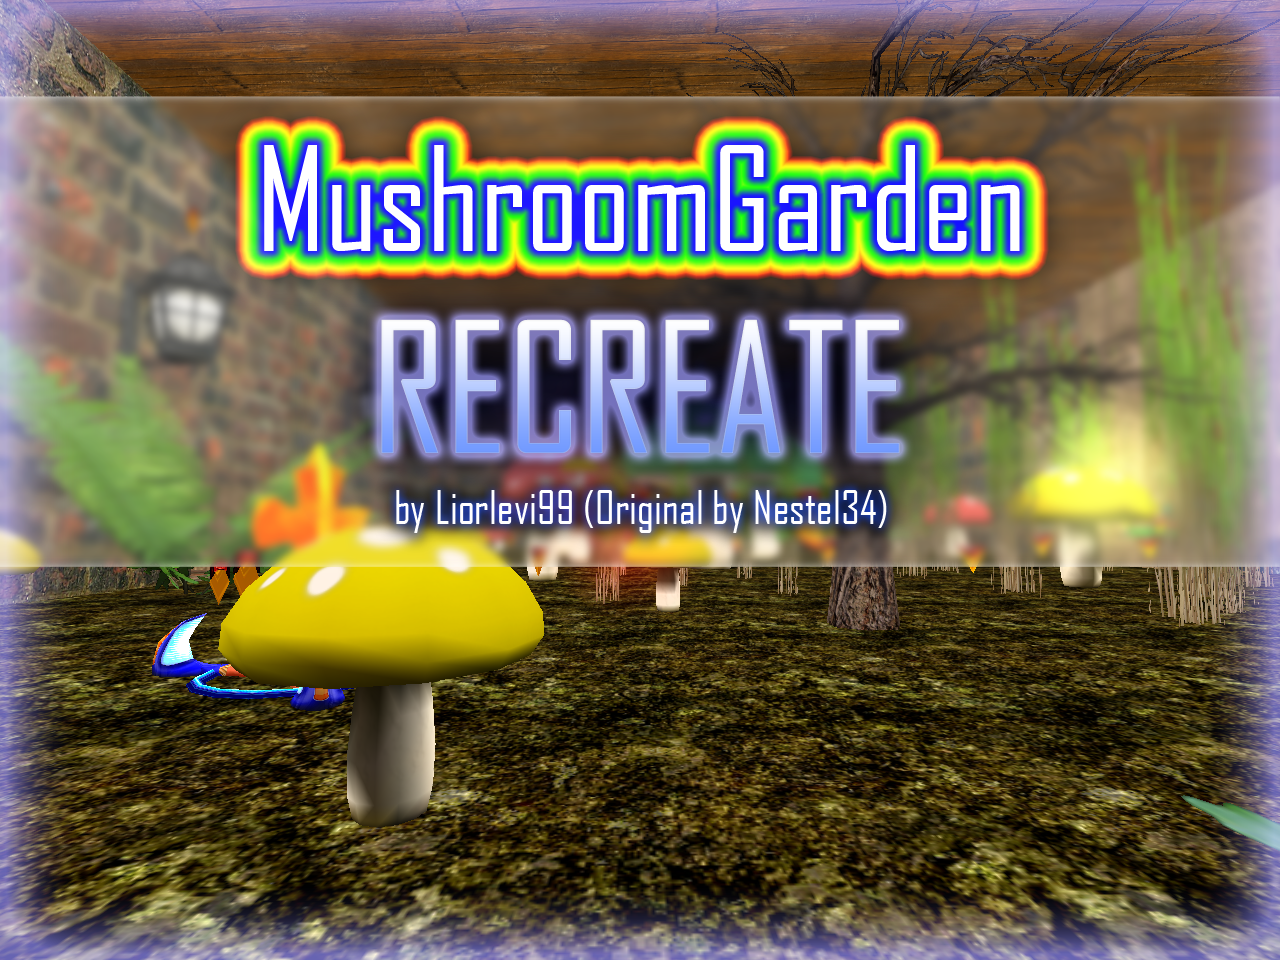 Mushroom Garden [Recreate]